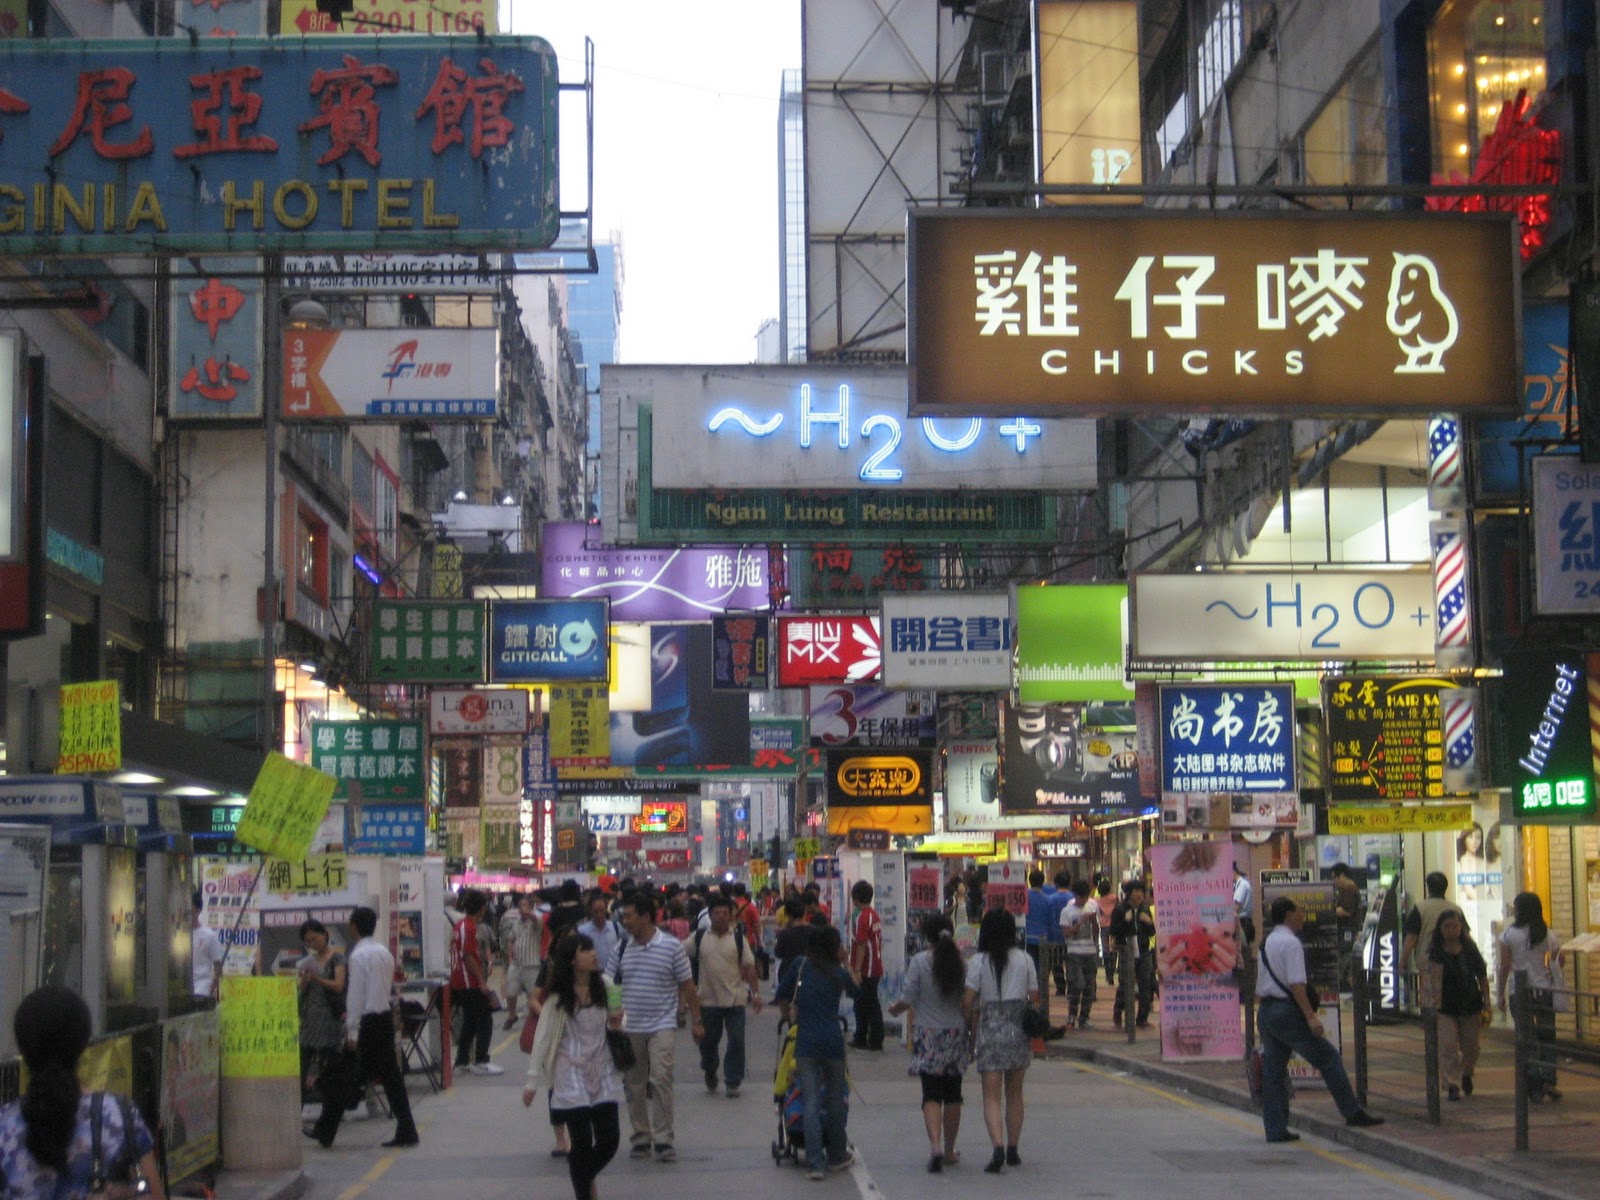 SPD3159 Attractions in Hong Kong!: Sai Yeung Choi Street South 西洋菜南街 8 ...